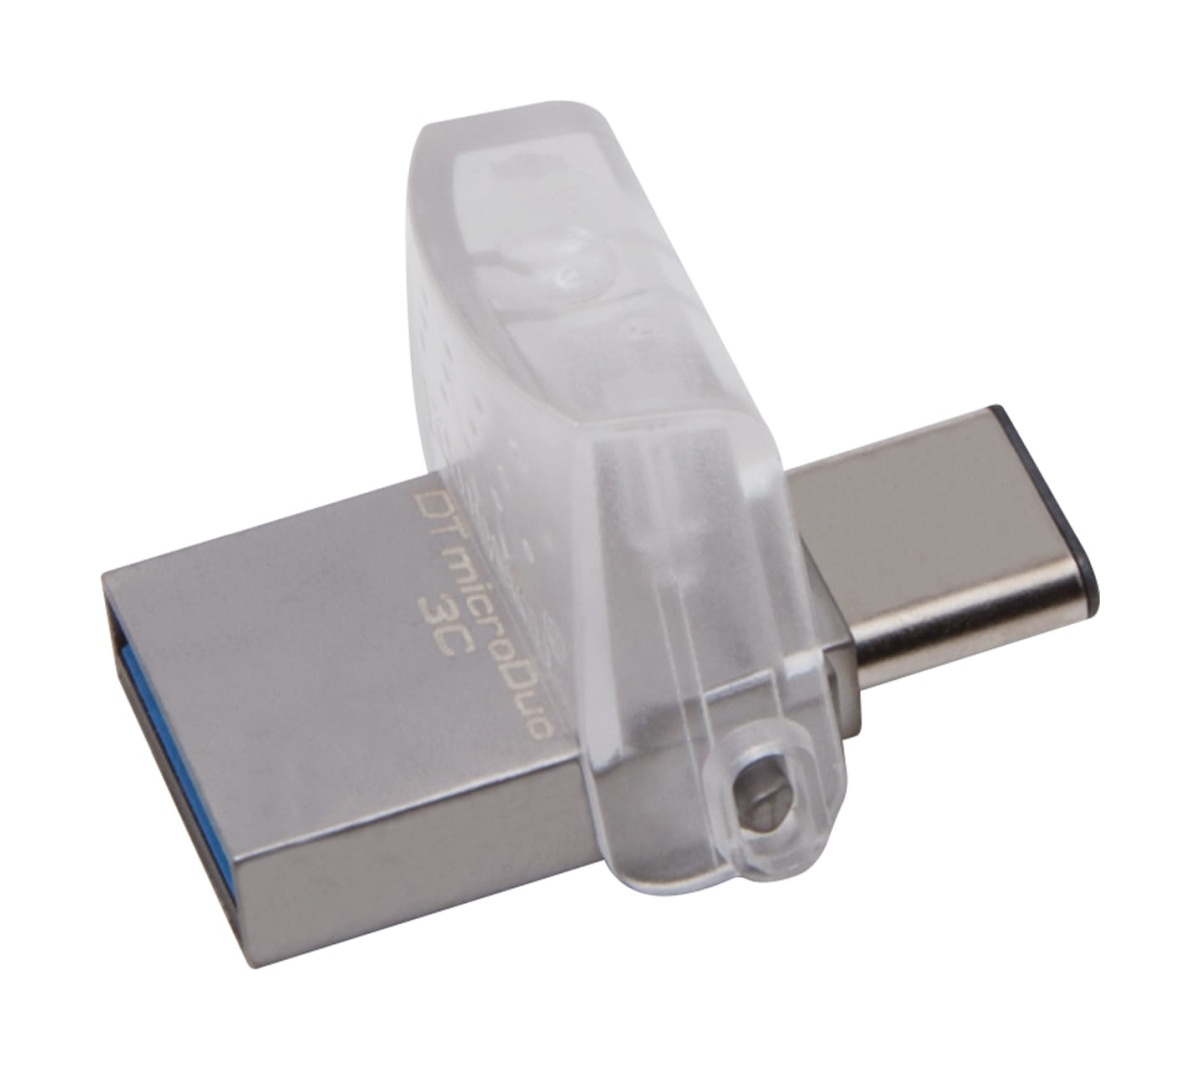 Kingston DataTraveler microDuo 3C - 32 GB (DTDUO3C-32GB)